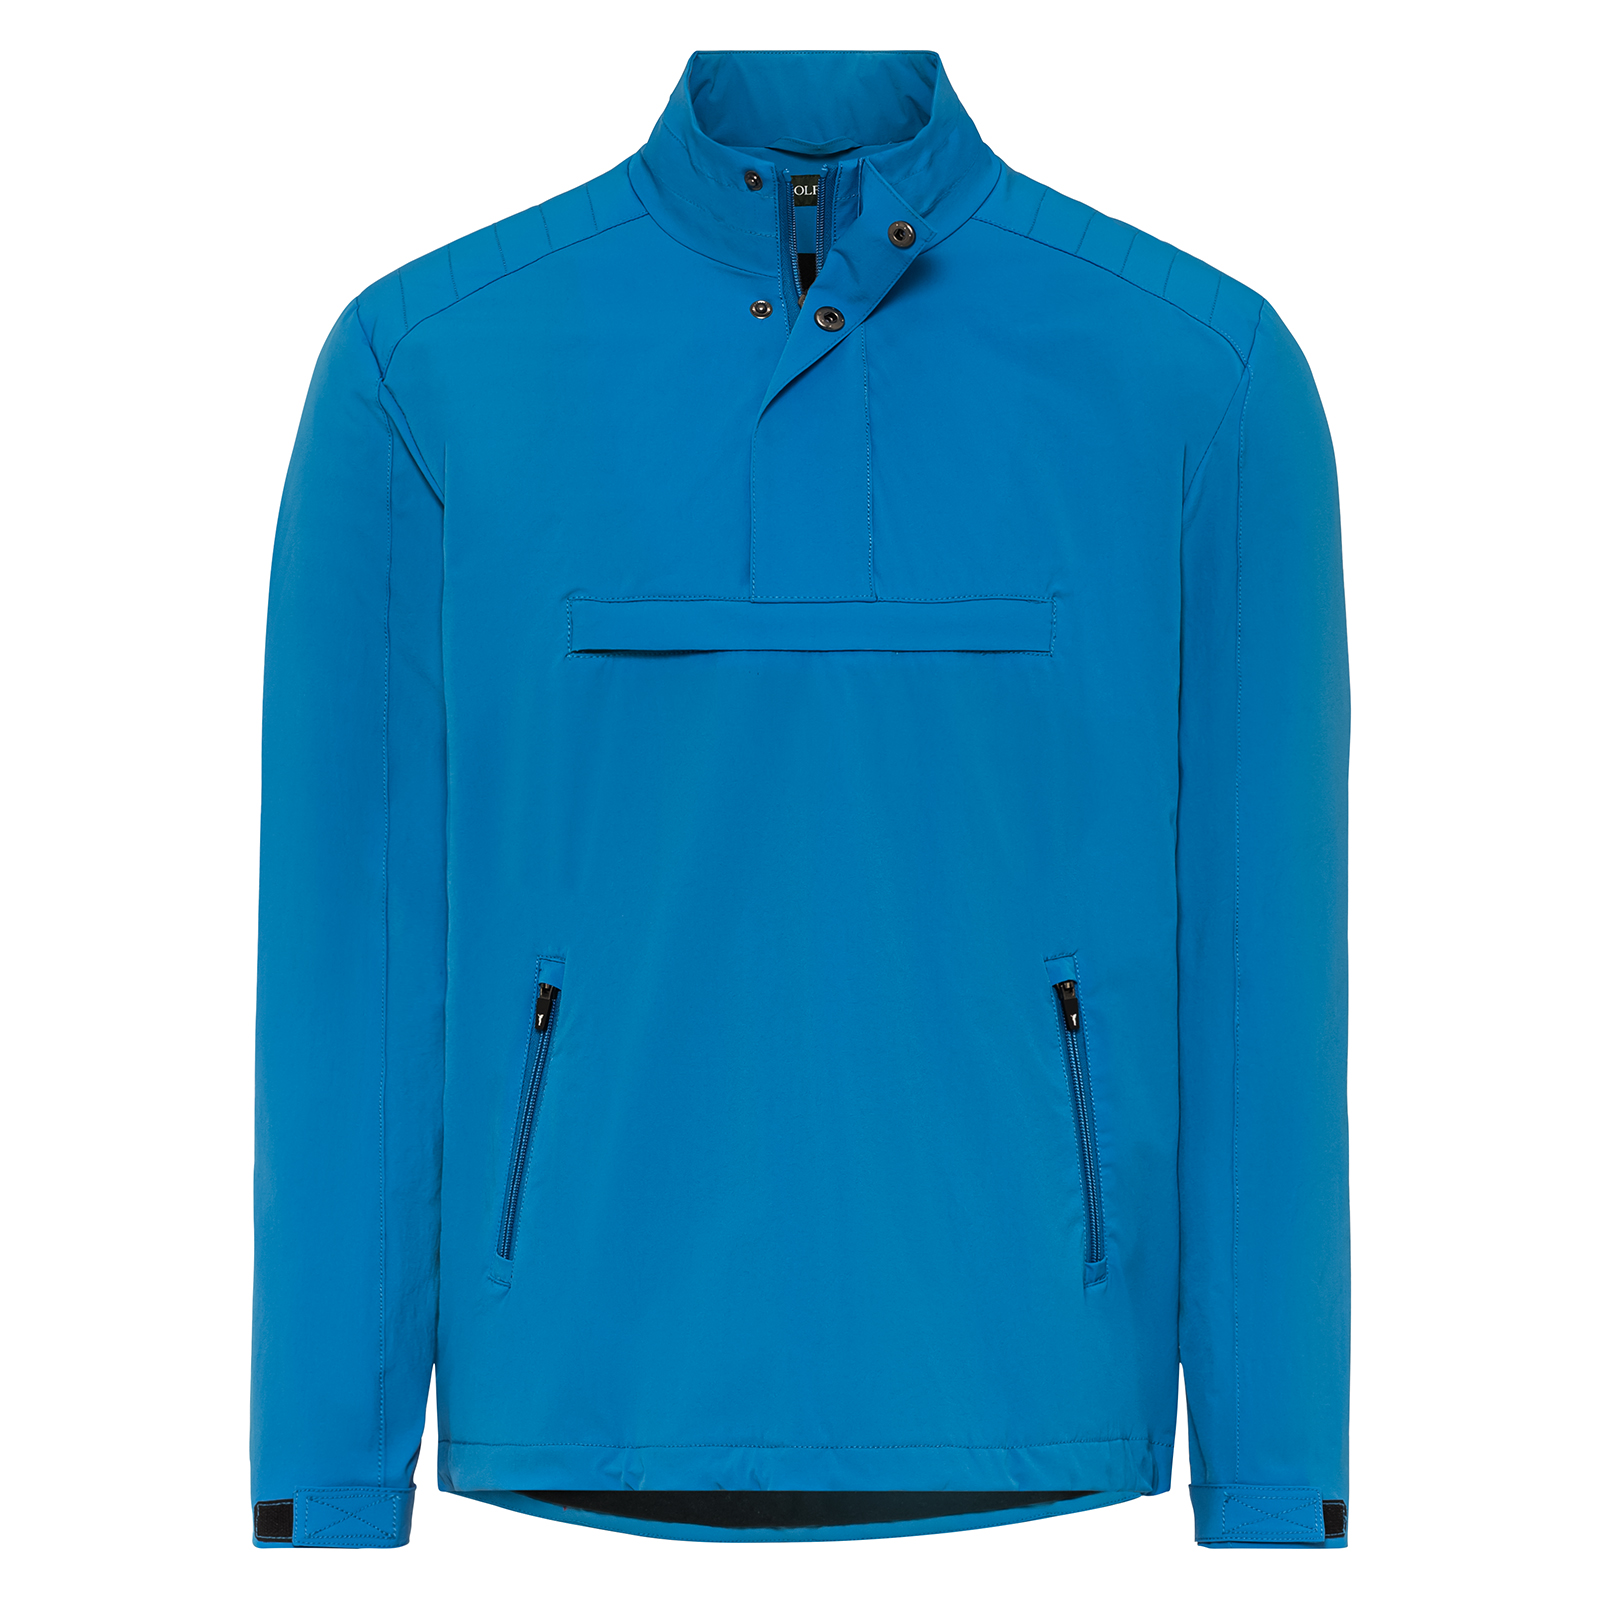 Men's elegant slip-on golf jacket with stretch component